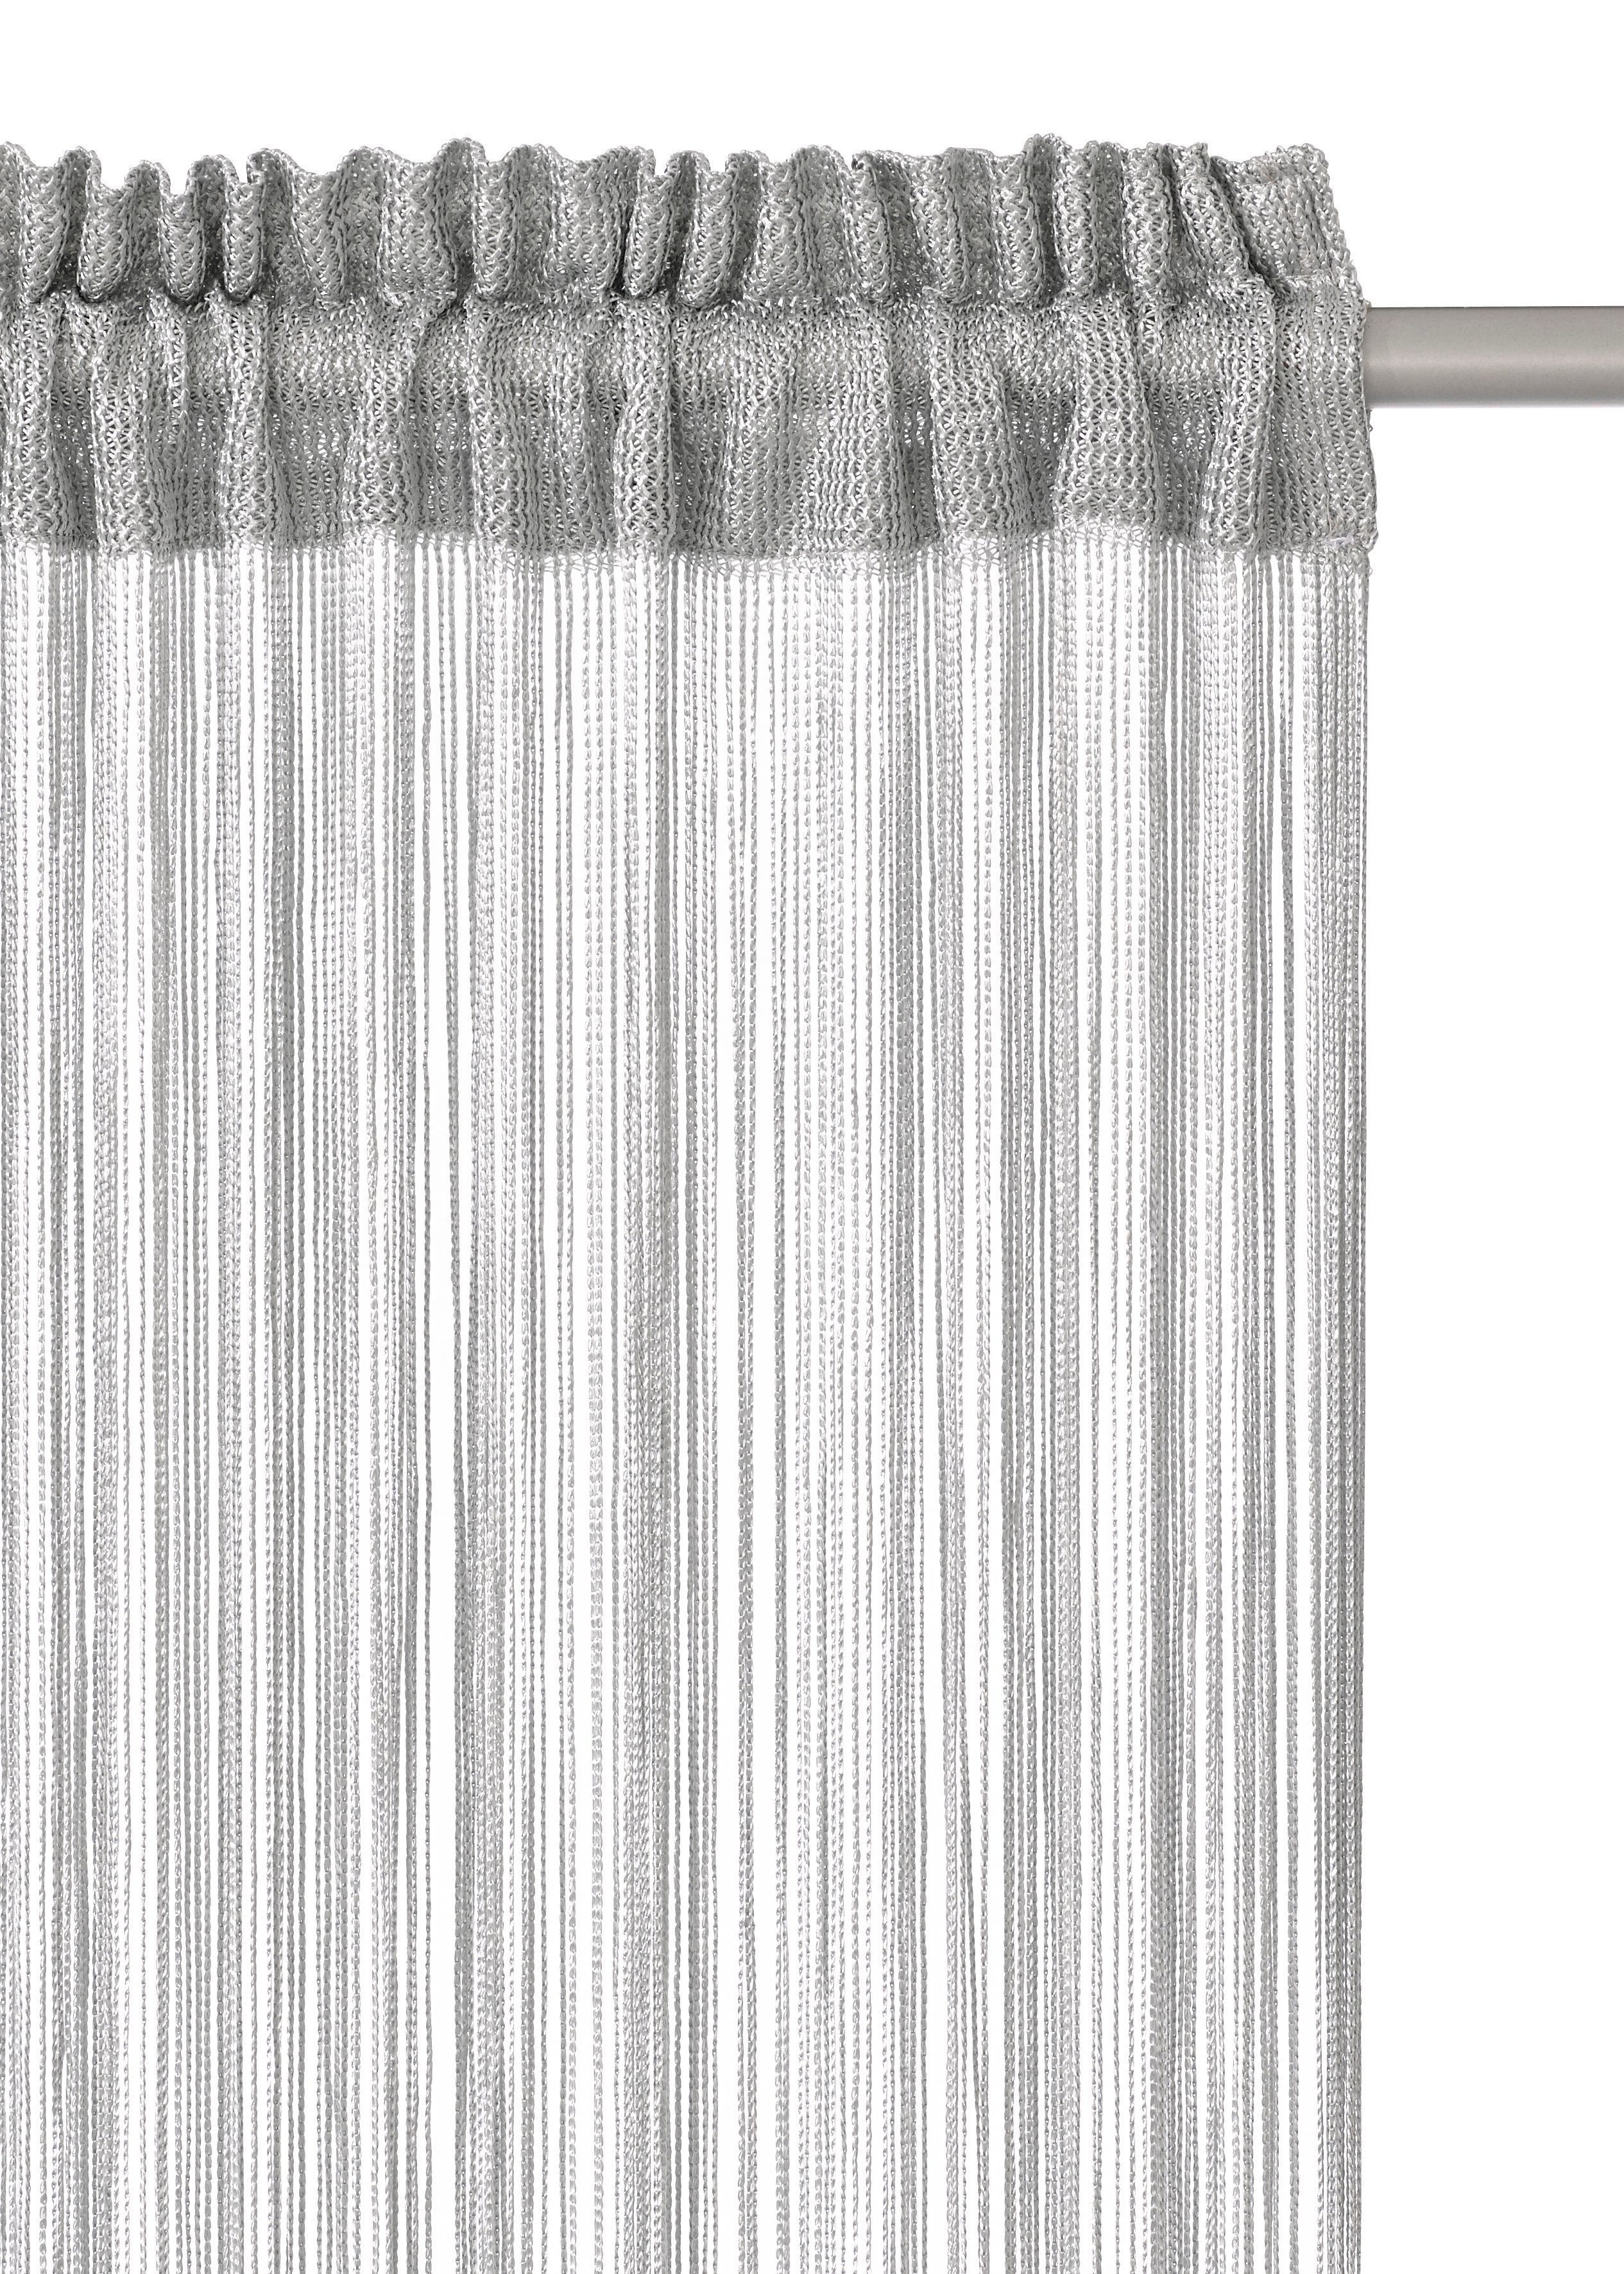 Fadenvorhang Stangendurchzug my pflegeleicht Polyester, (1 silbergrau transparent, multifunktional, Fao-Uni, Kräuselband, St), transparent, home,